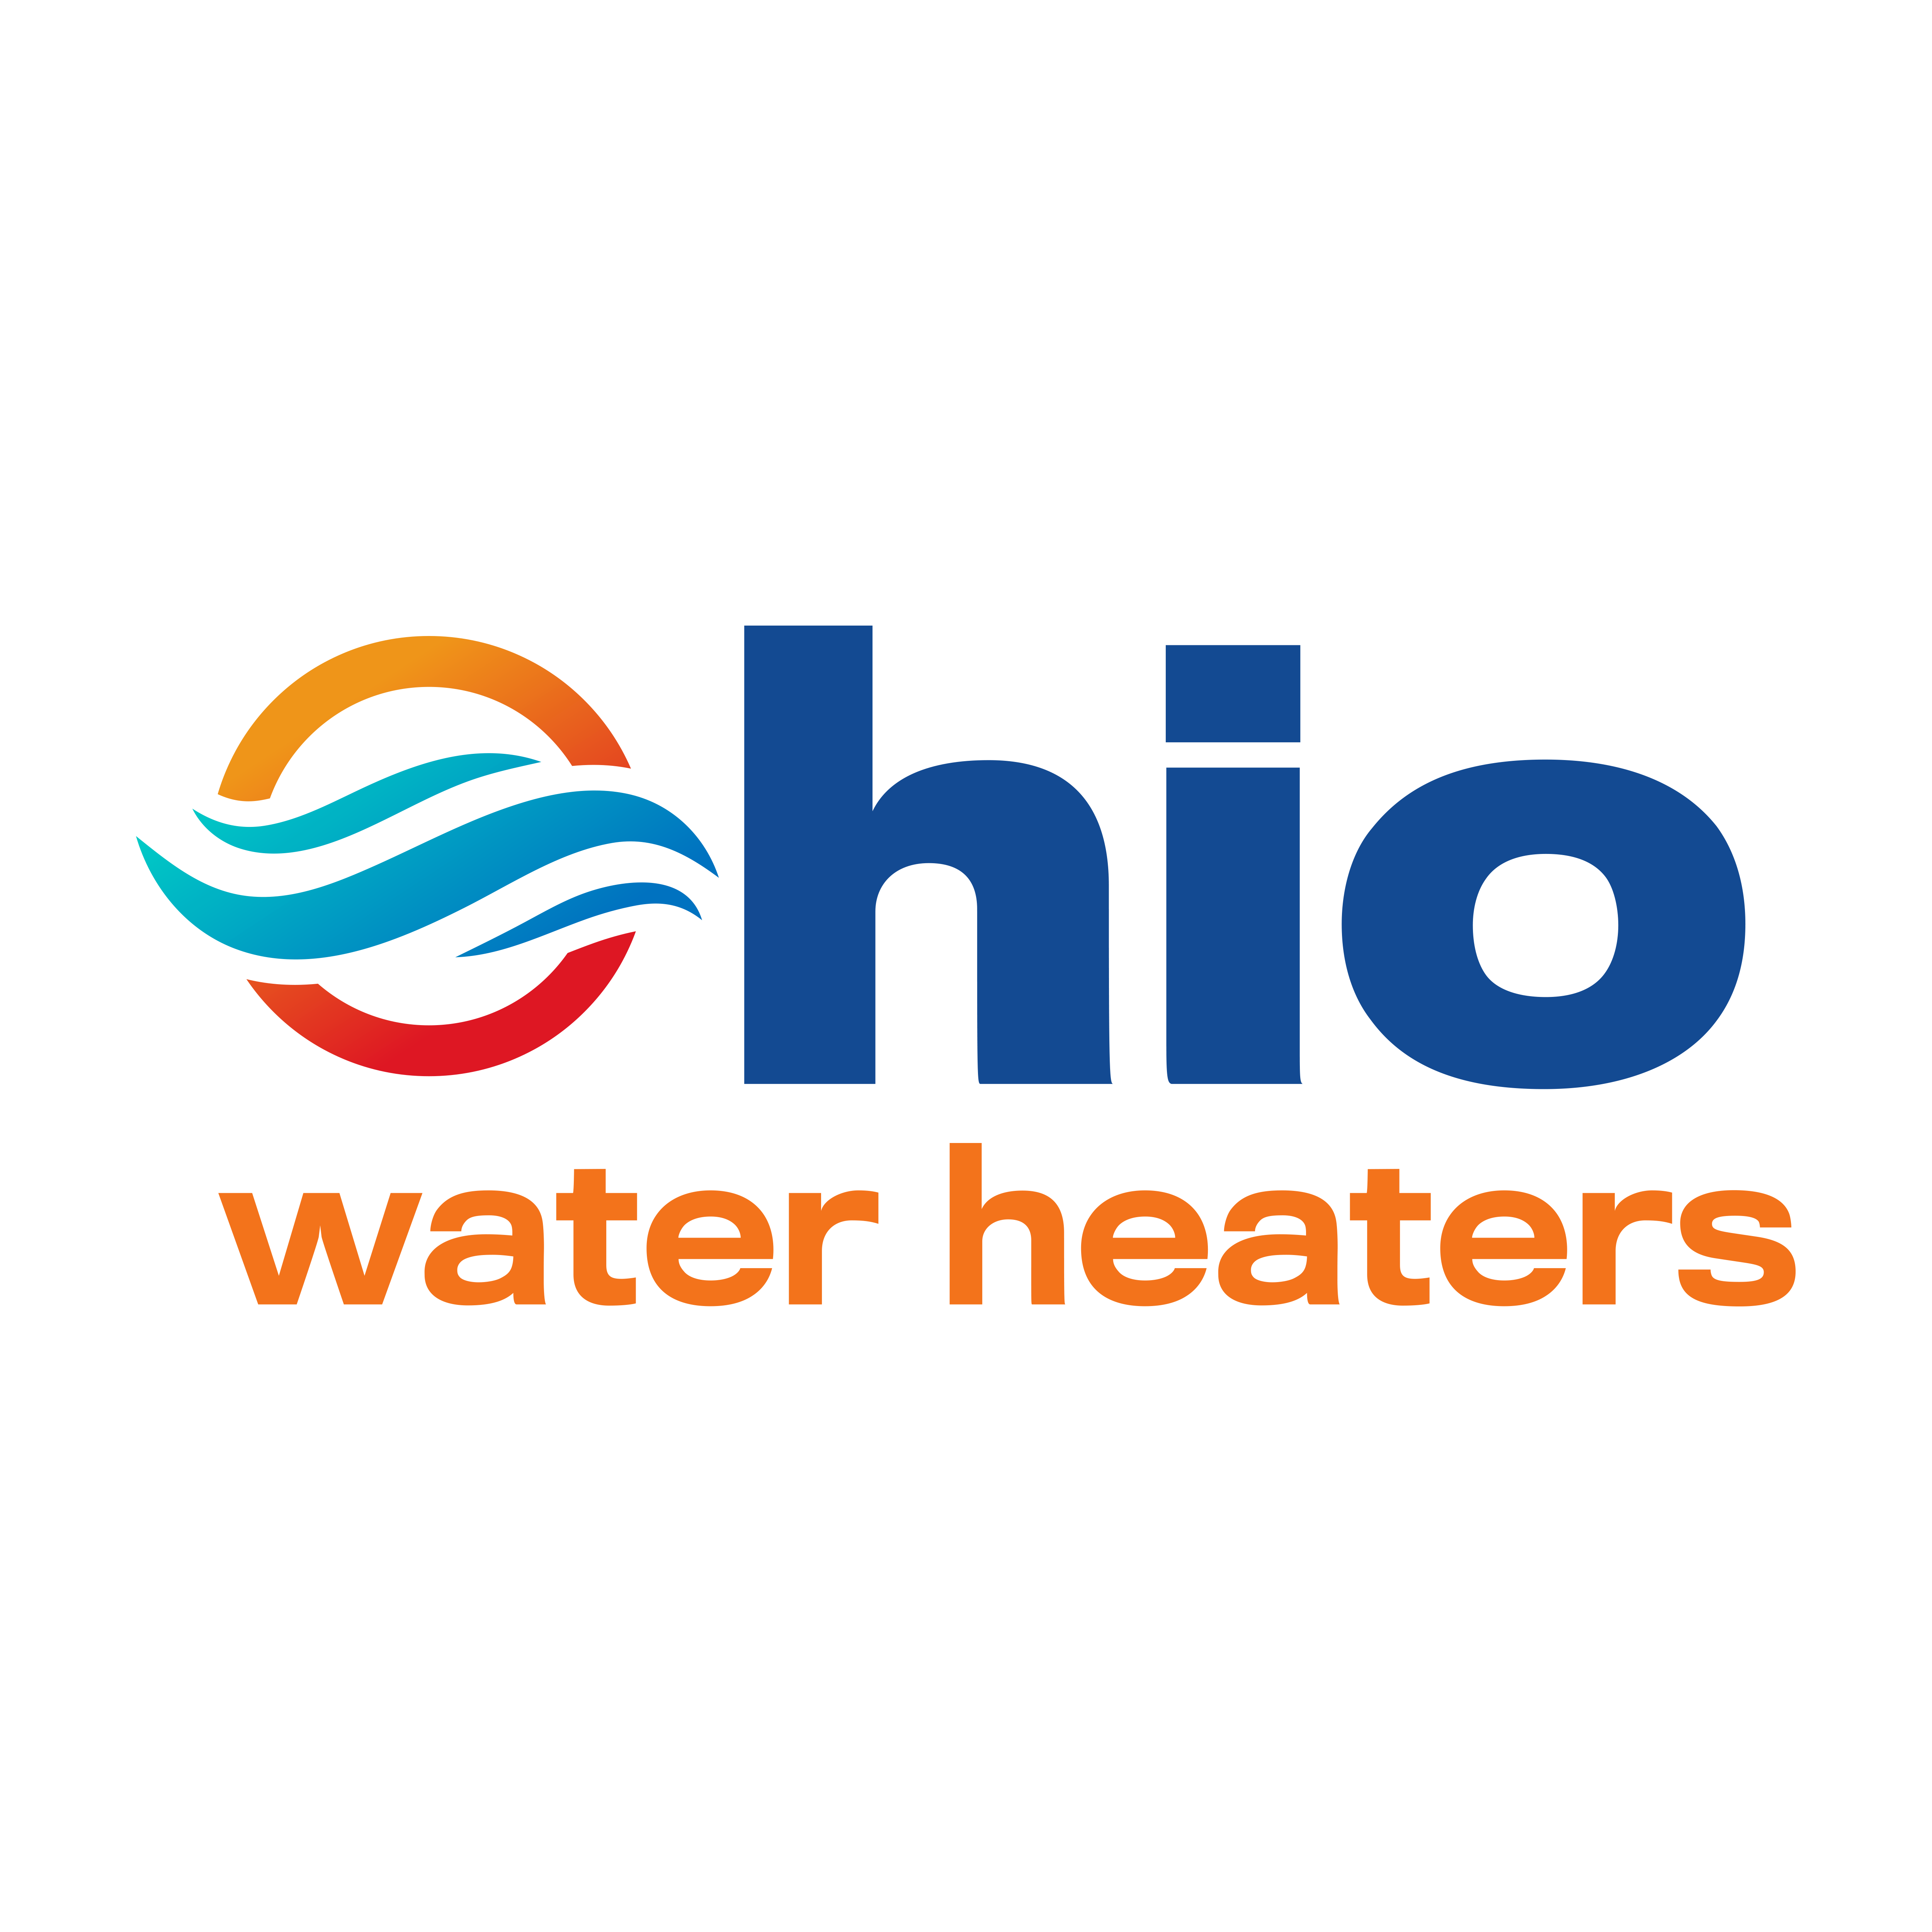 Ohio Water Heaters Logo